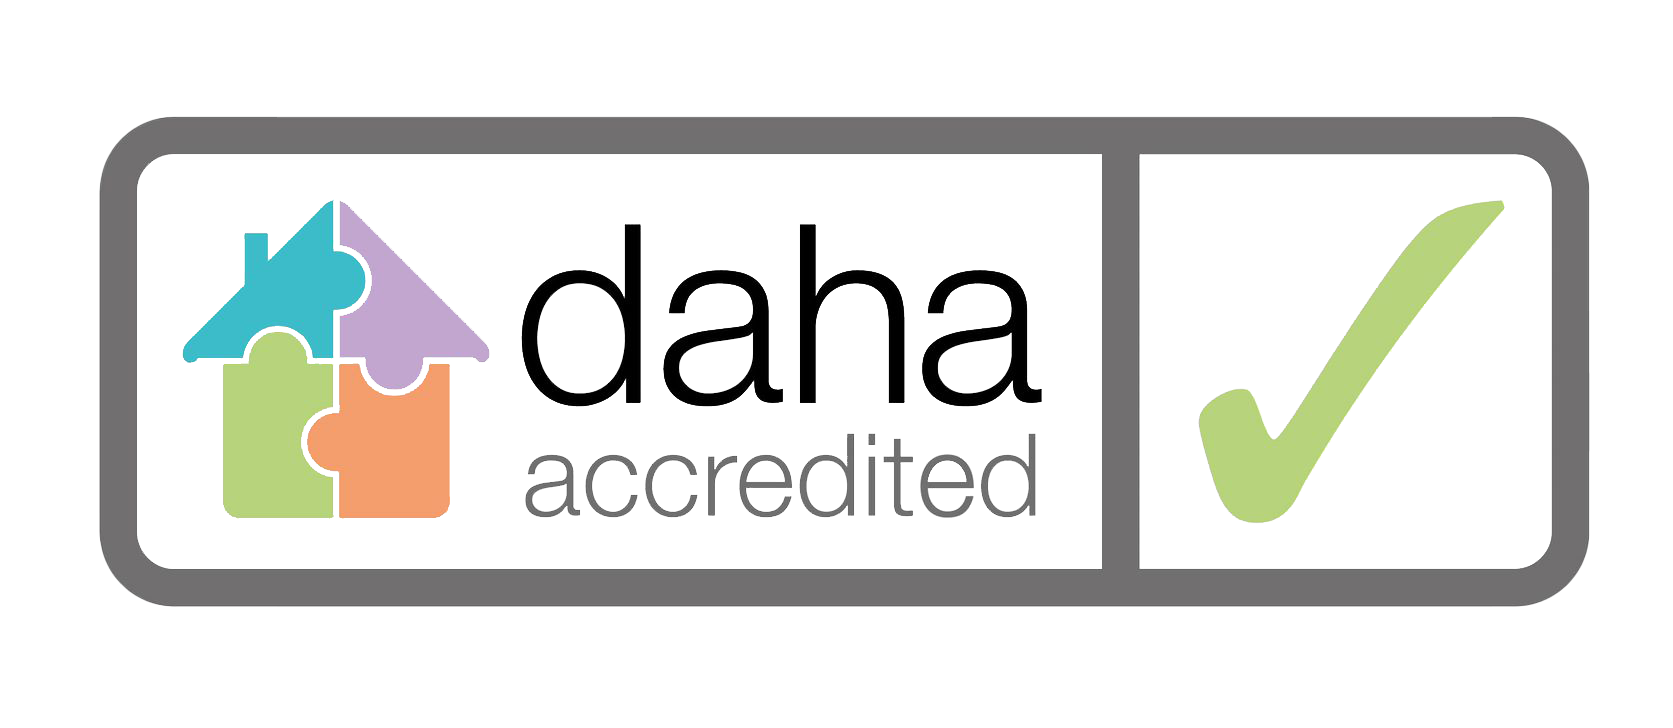 Daha accredited logo